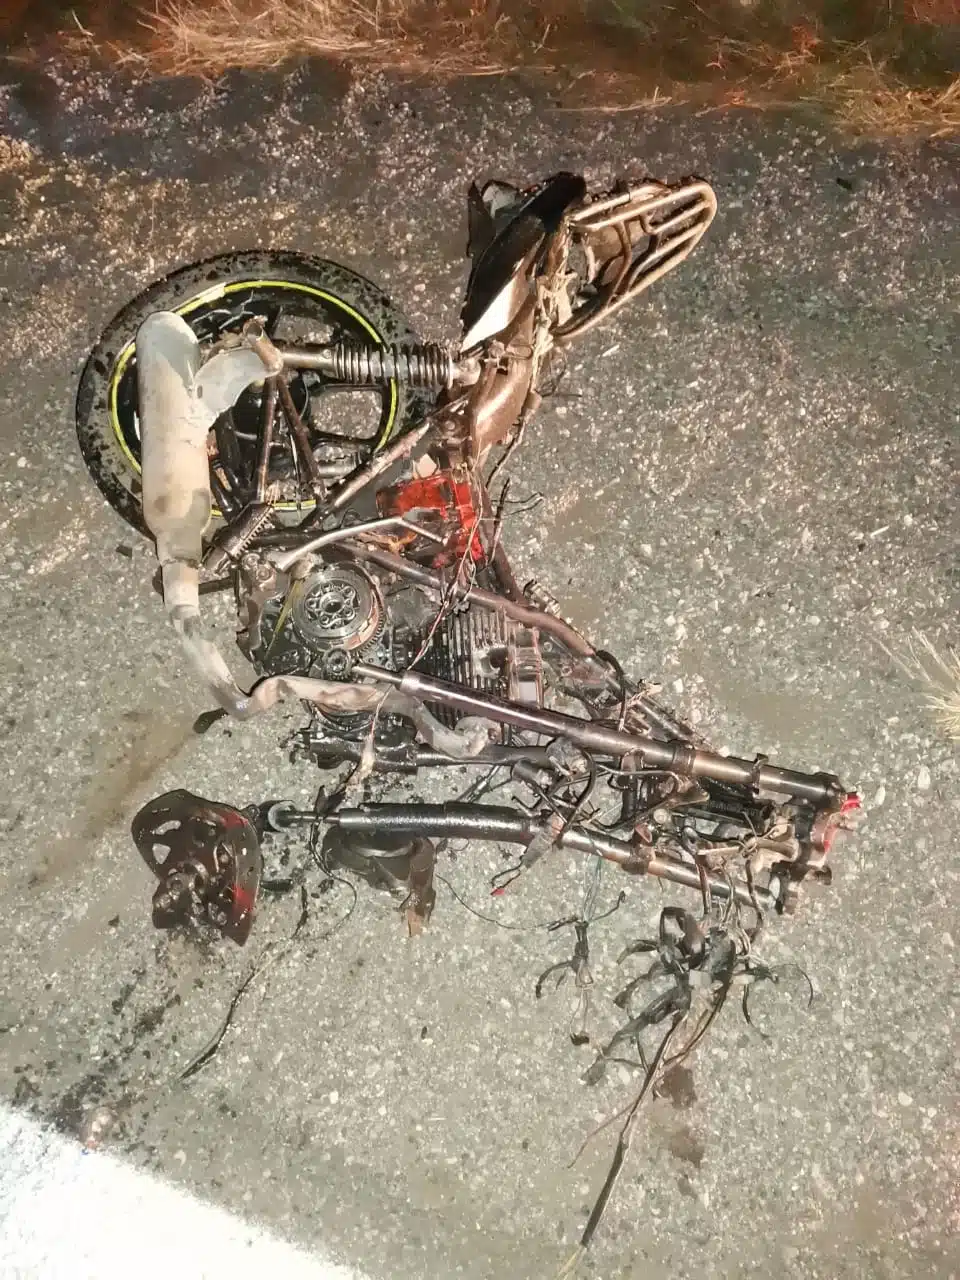 La motocicleta en la que viajaba la pareja quedó destroza.